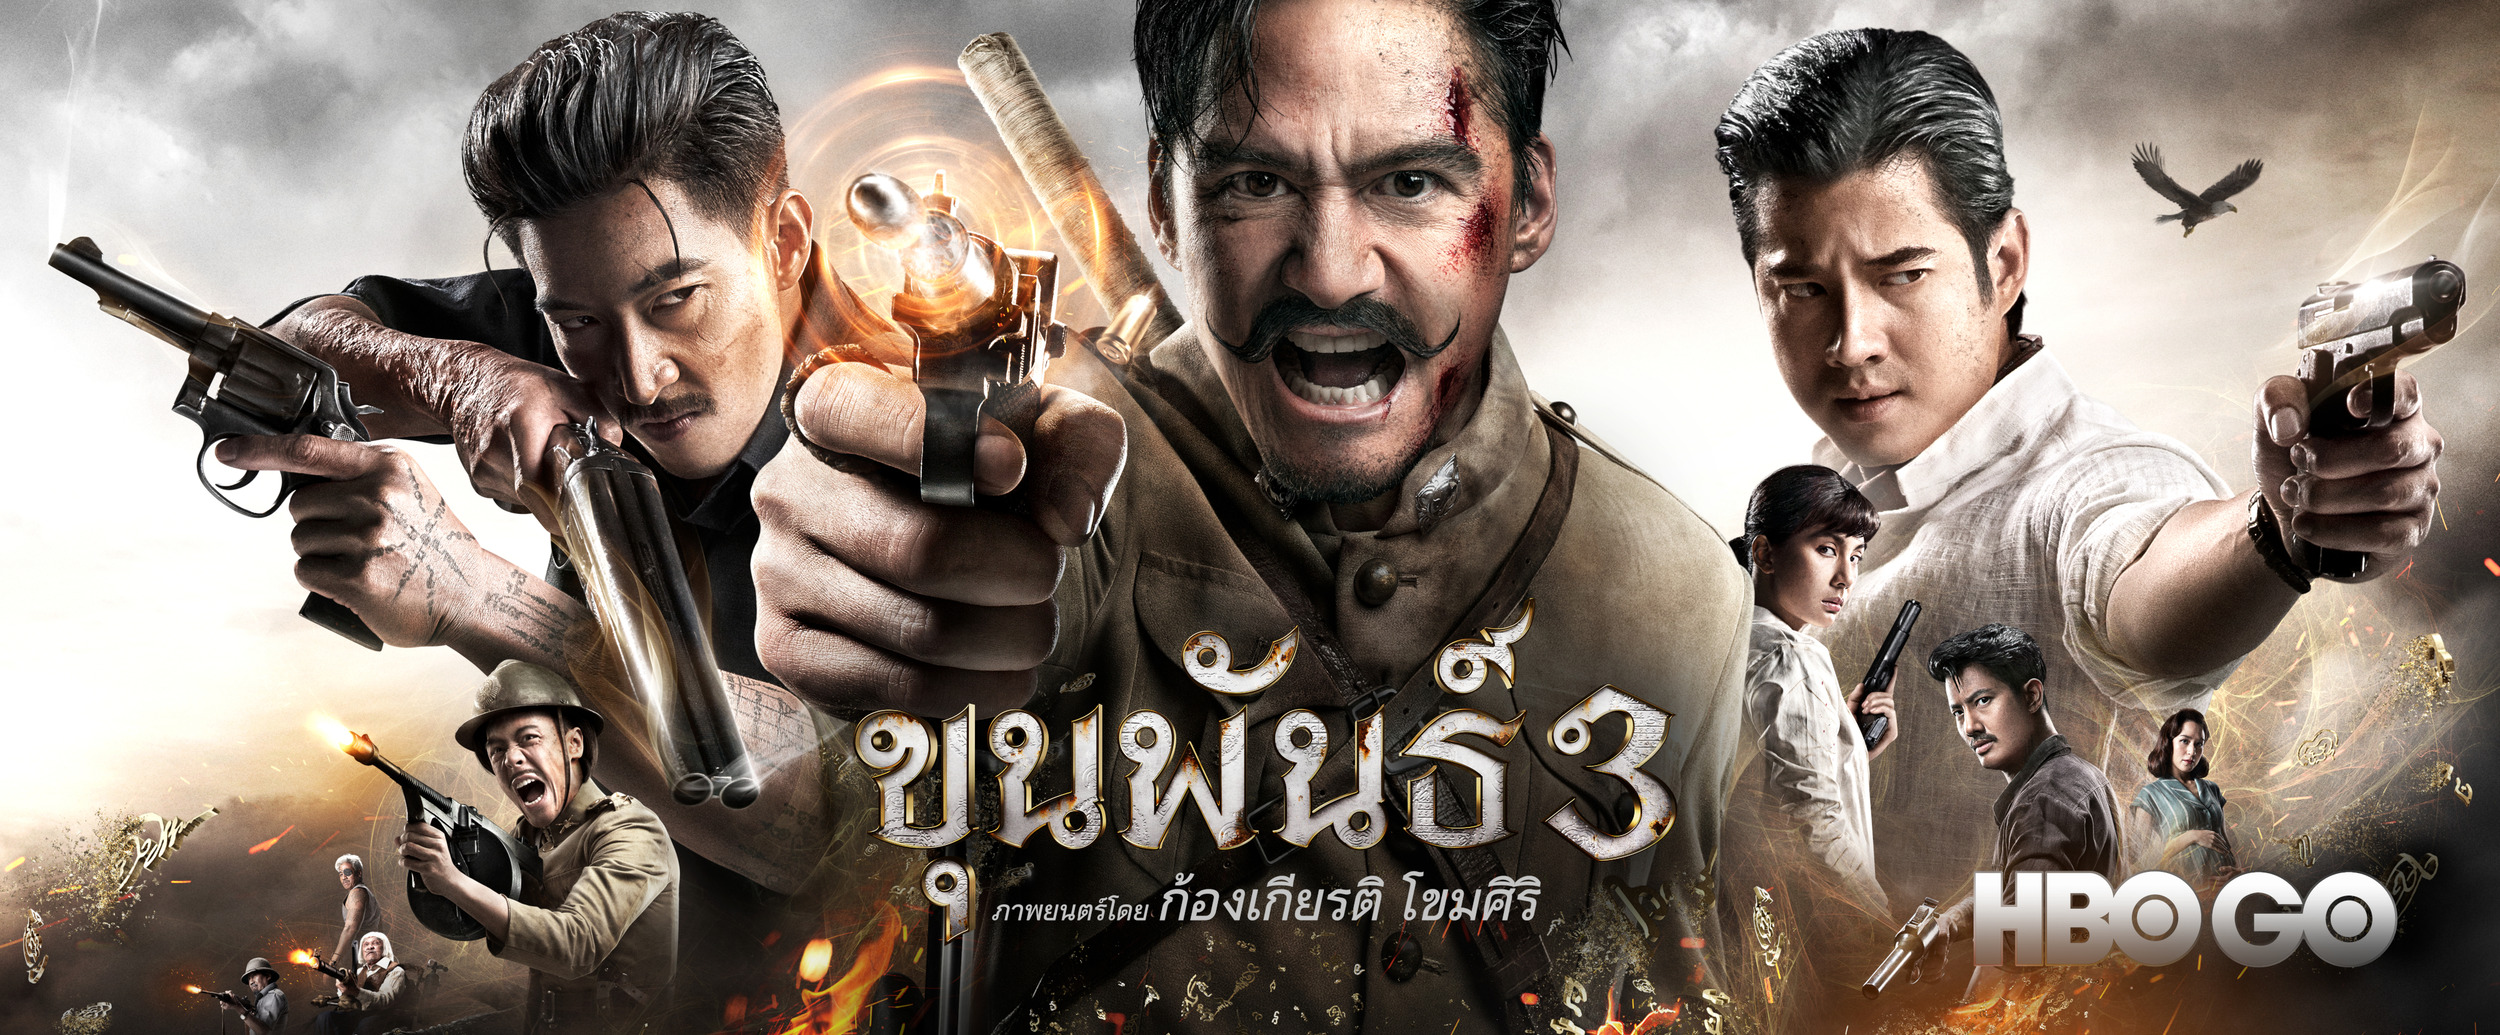 Mega Sized Movie Poster Image for Khun Pan 3 (#10 of 10)